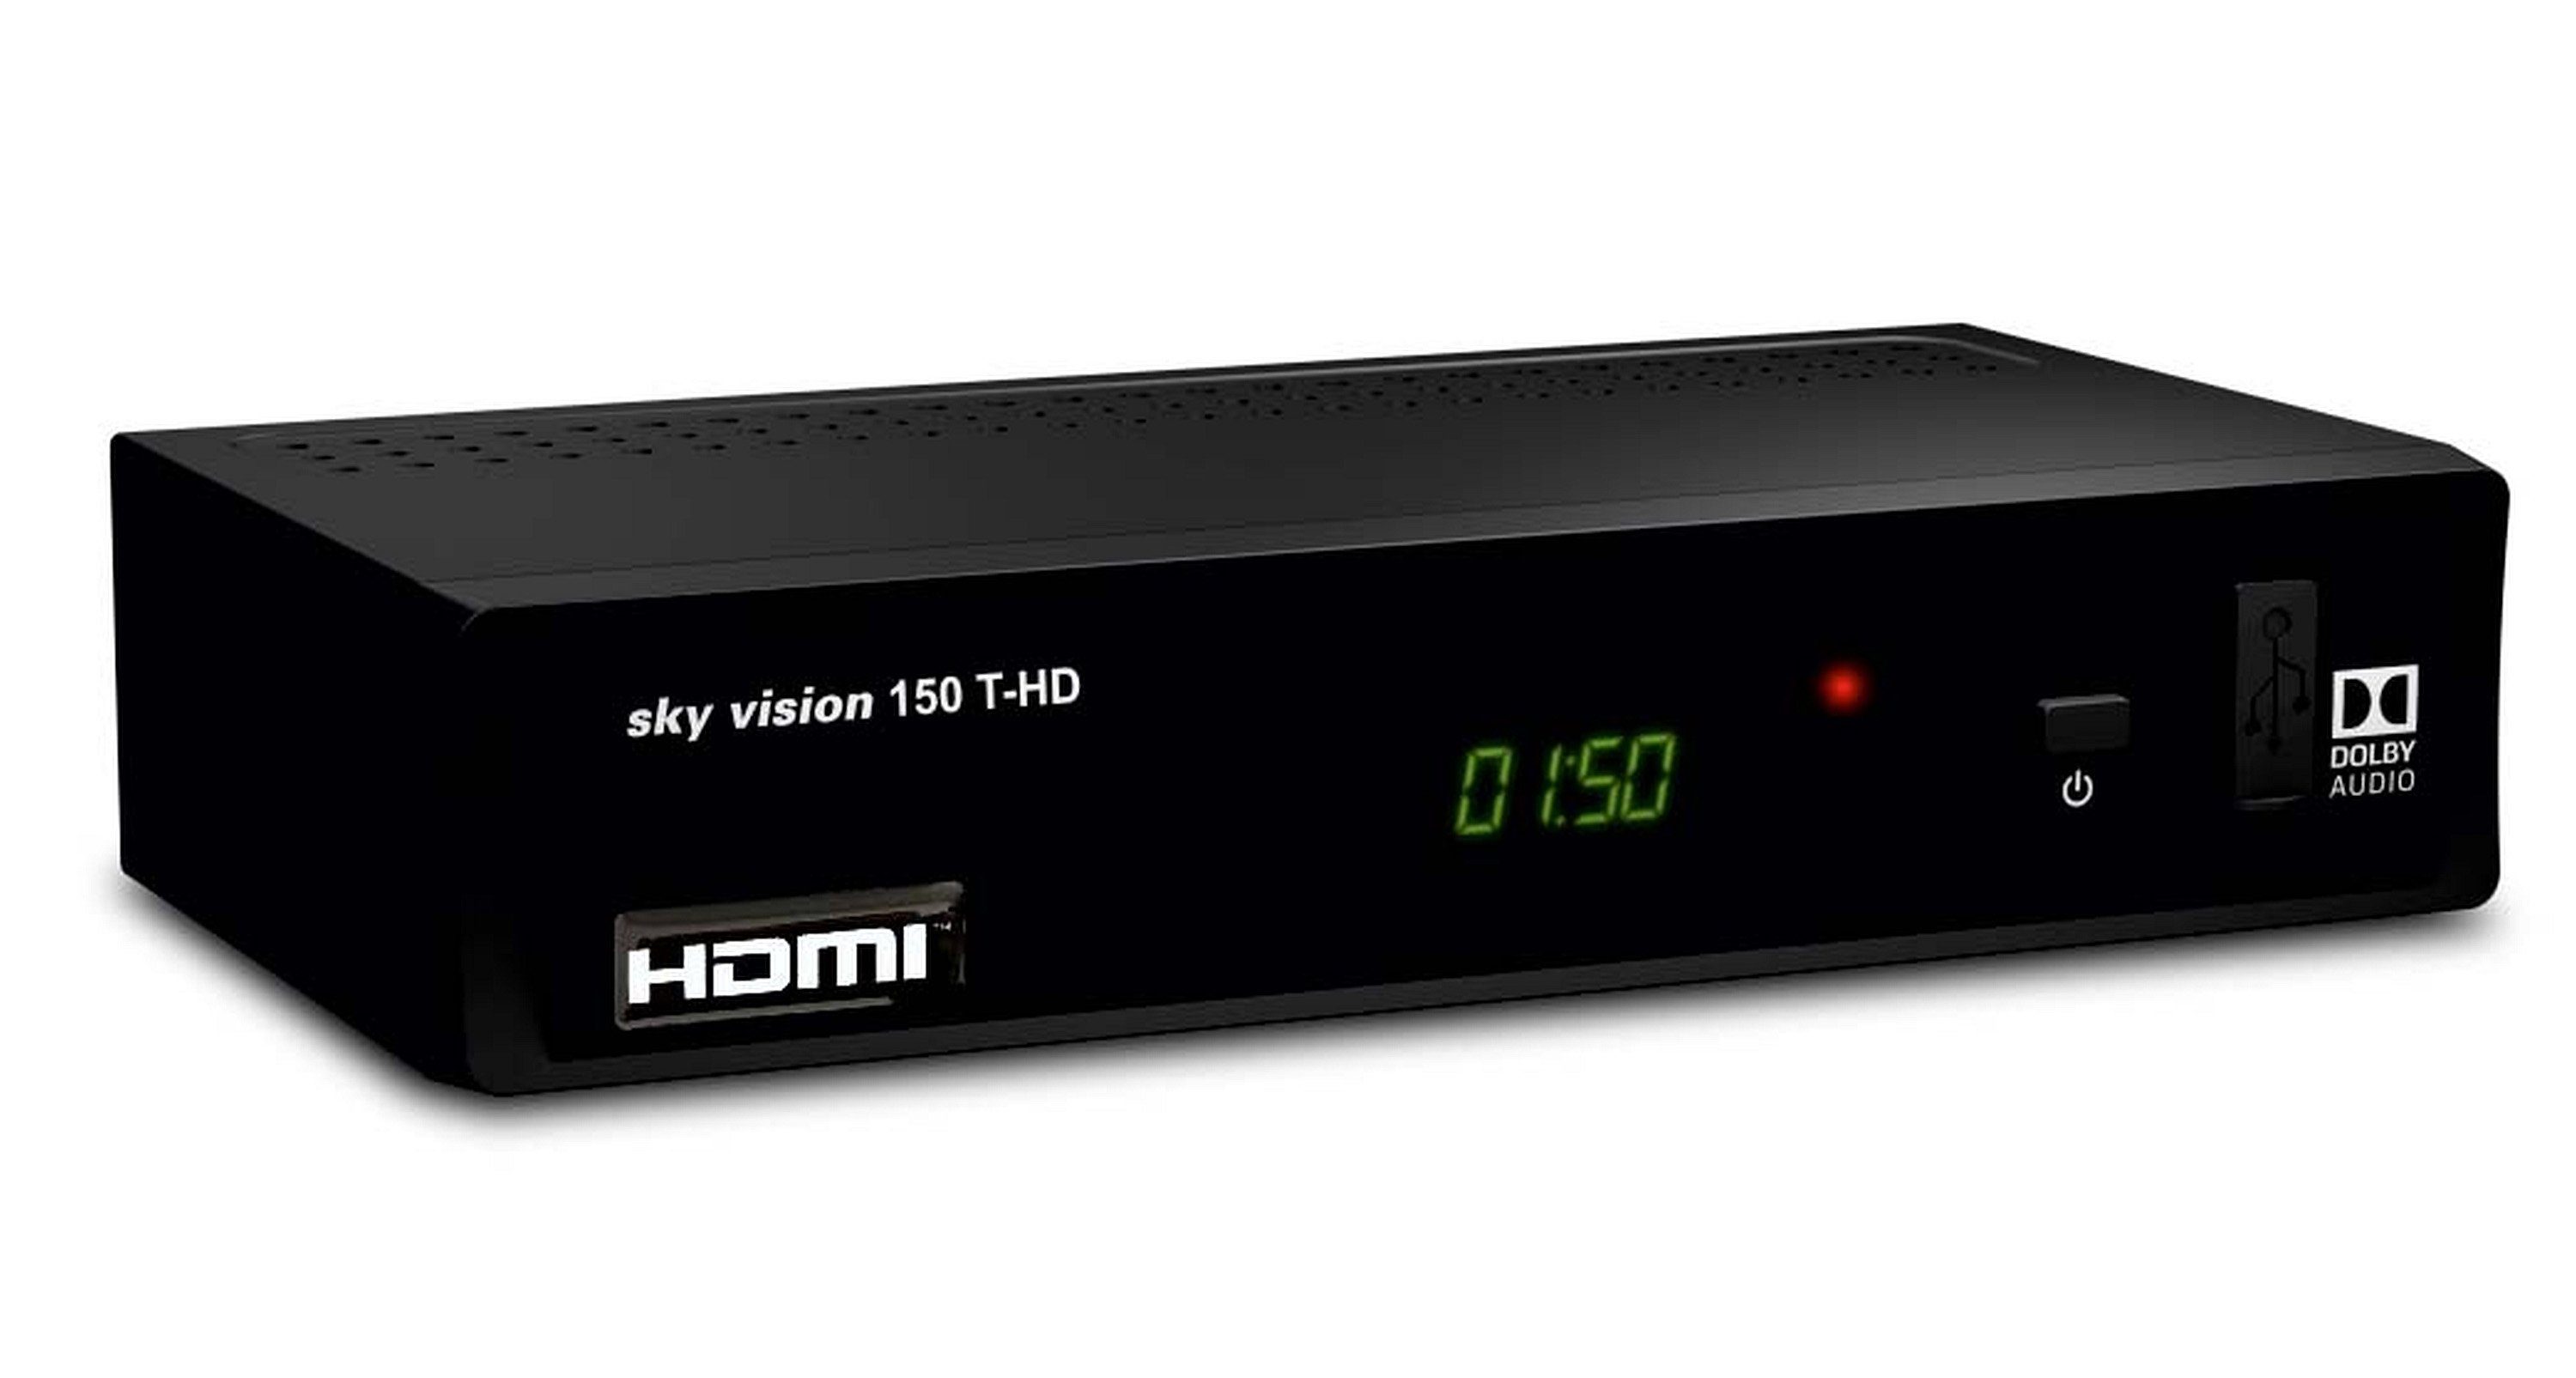 Sky Vision DVB-T2 HD Receiver